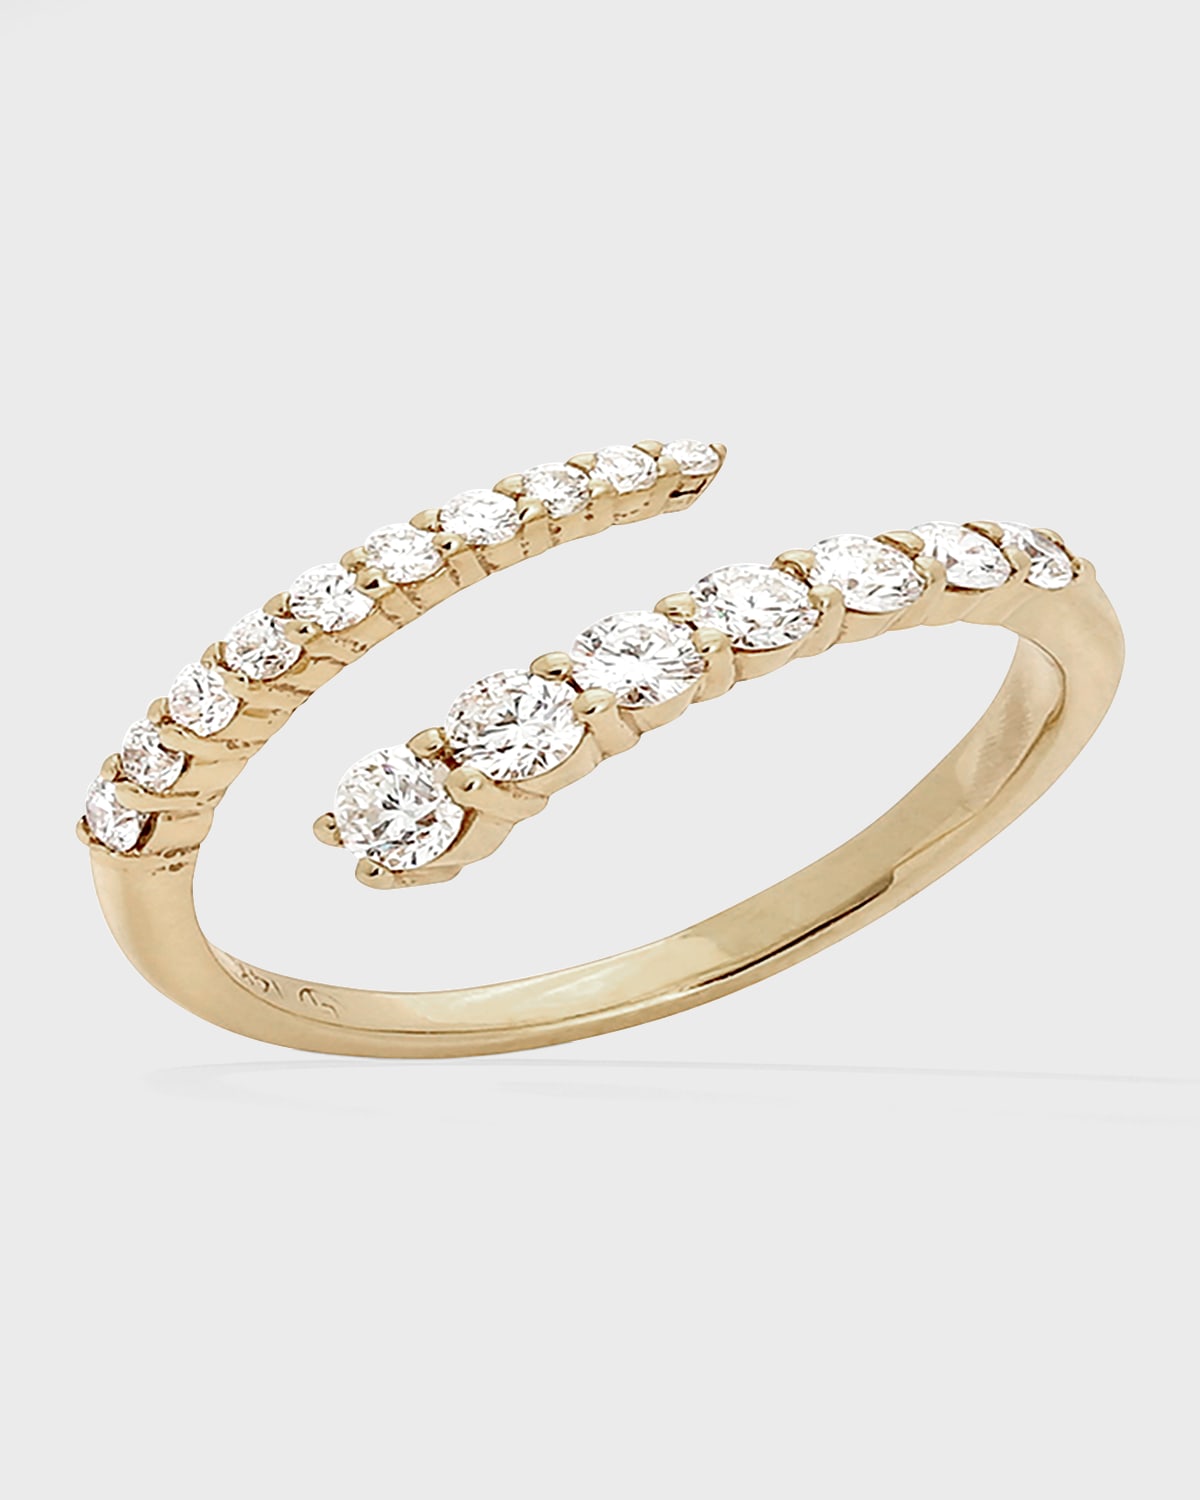 Lana Flawless Double Graduating Diamond Ring